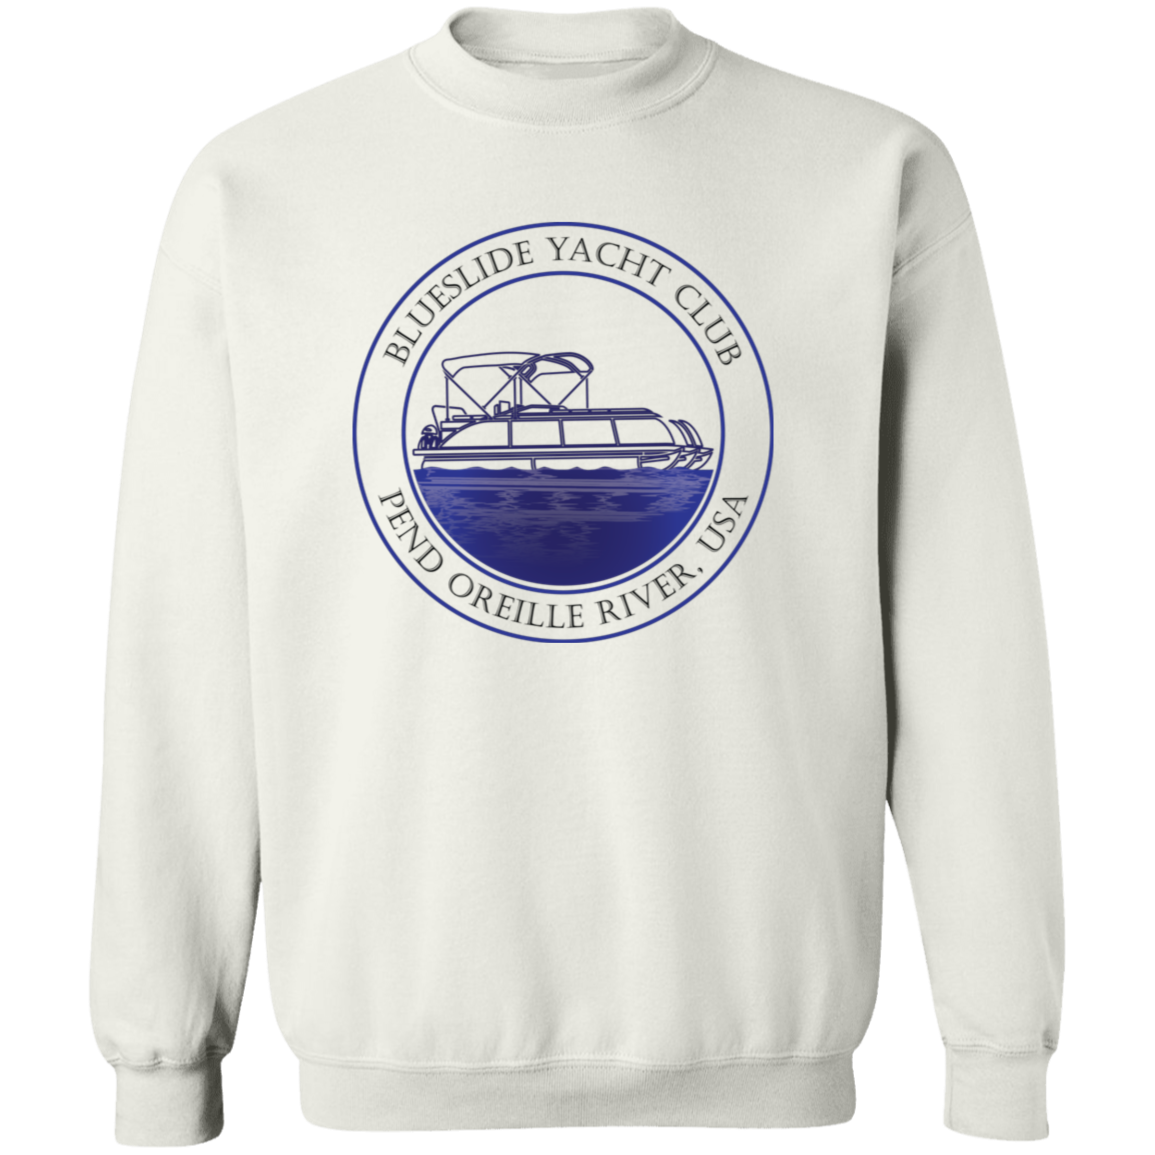 Blueslide Yacht Club - Sweatshirt